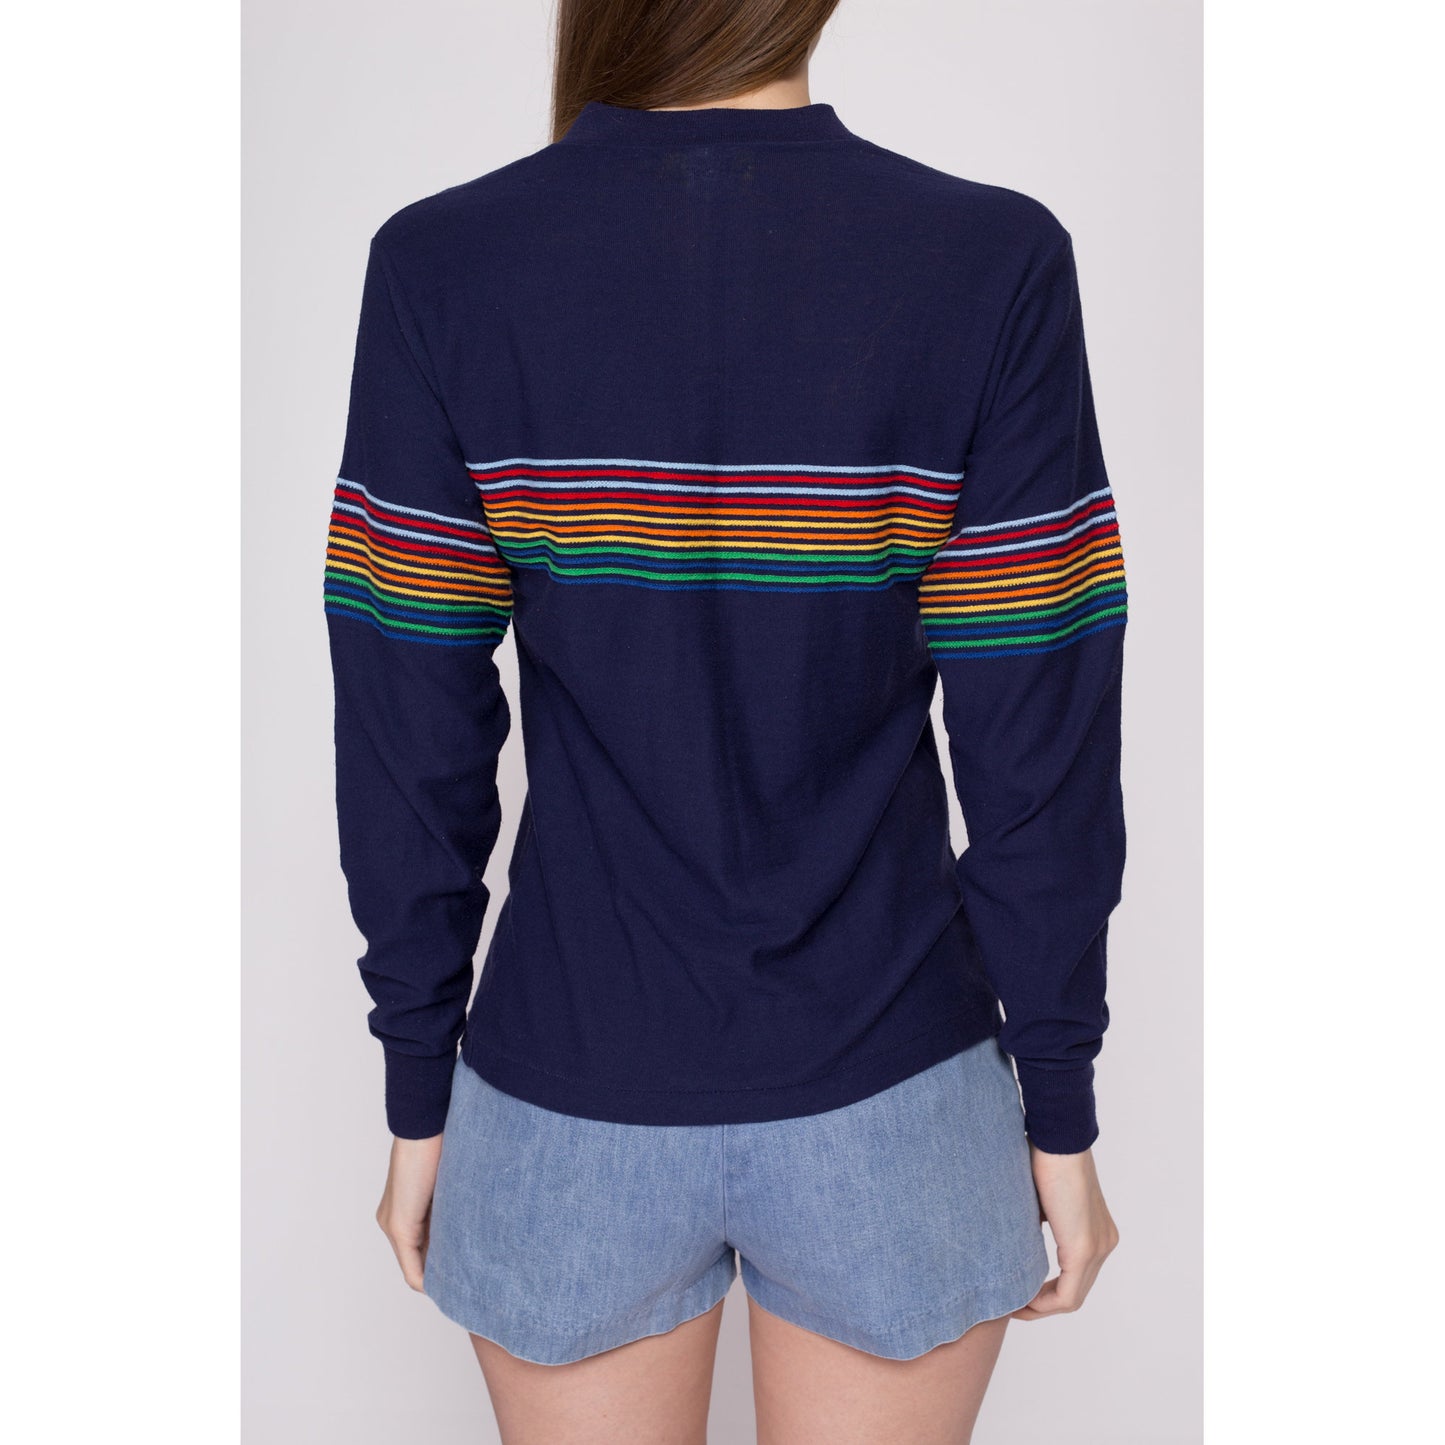 S| 70s American University Rainbow Striped Shirt - Unisex Small | Vintage Navy Blue Retro Long Sleeved Graphic University Tee